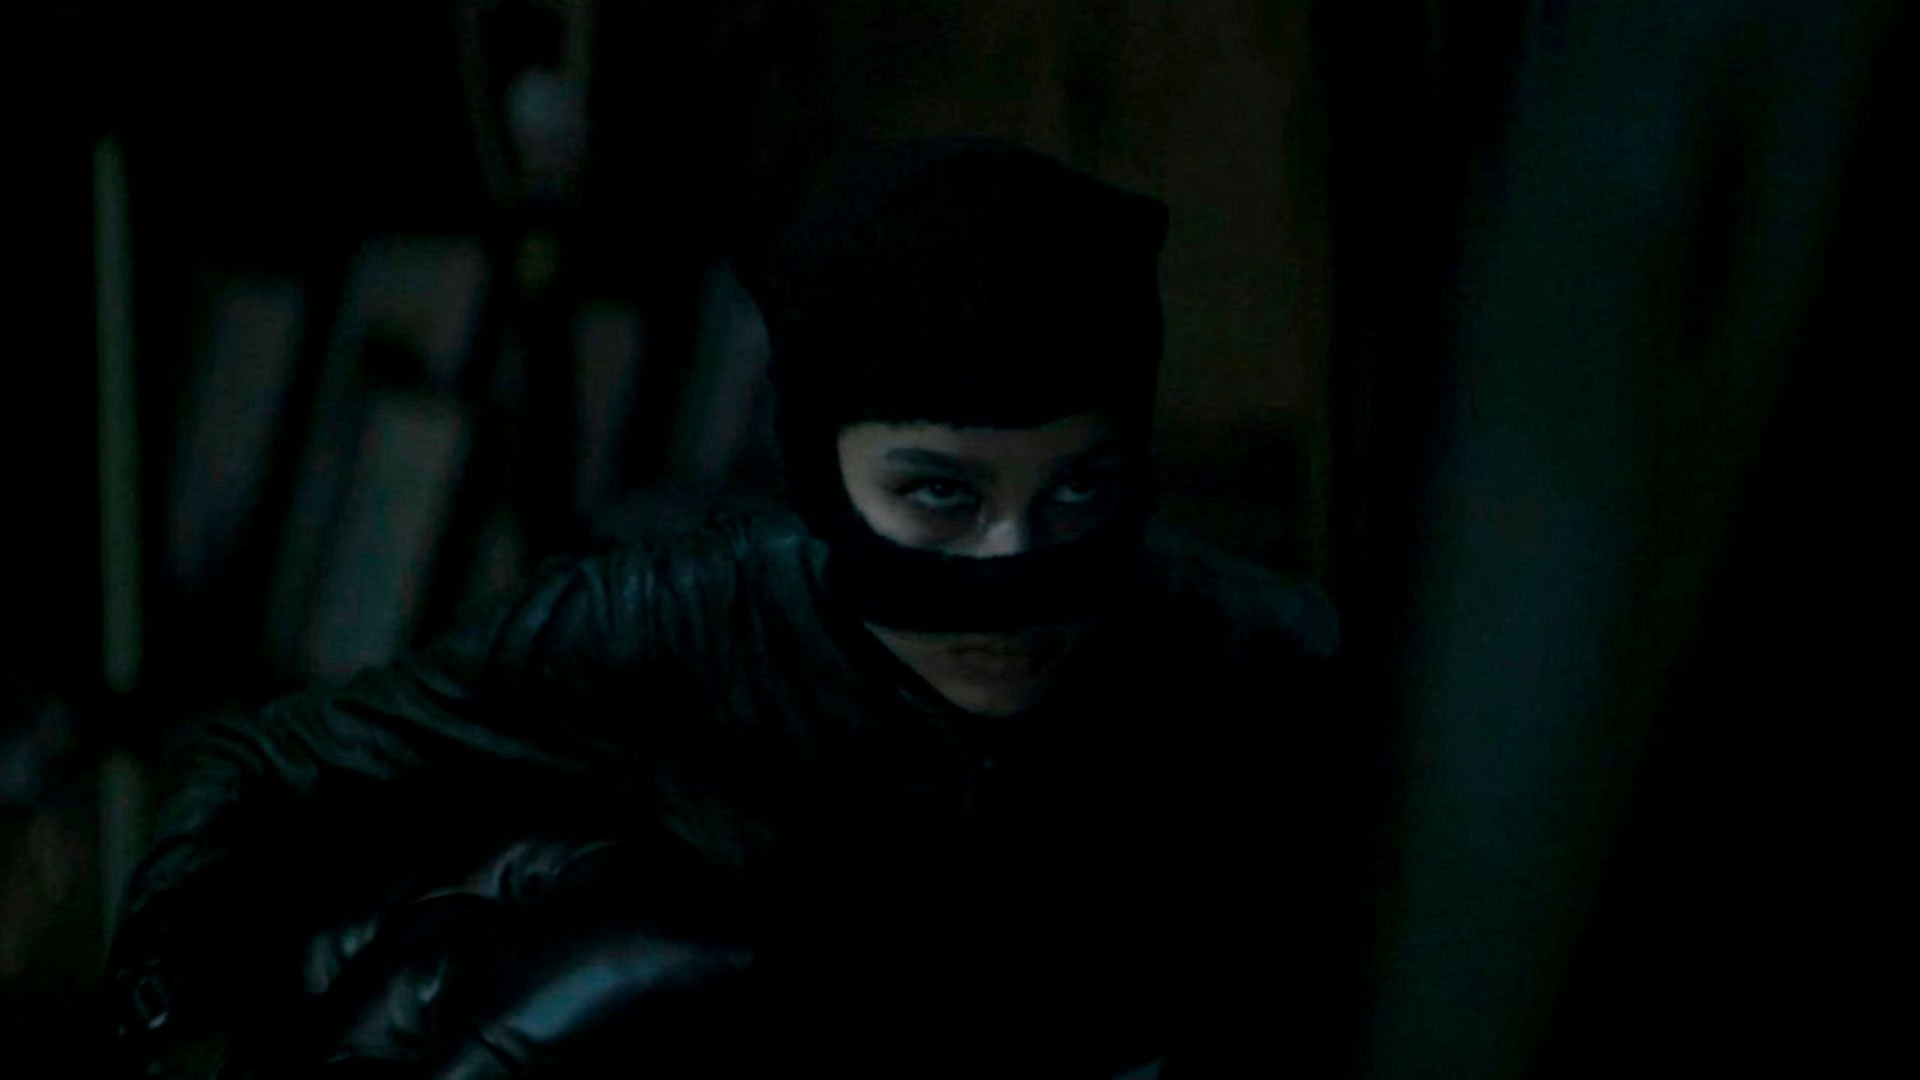 Zoe Kravitz as Catwoman in The Batman